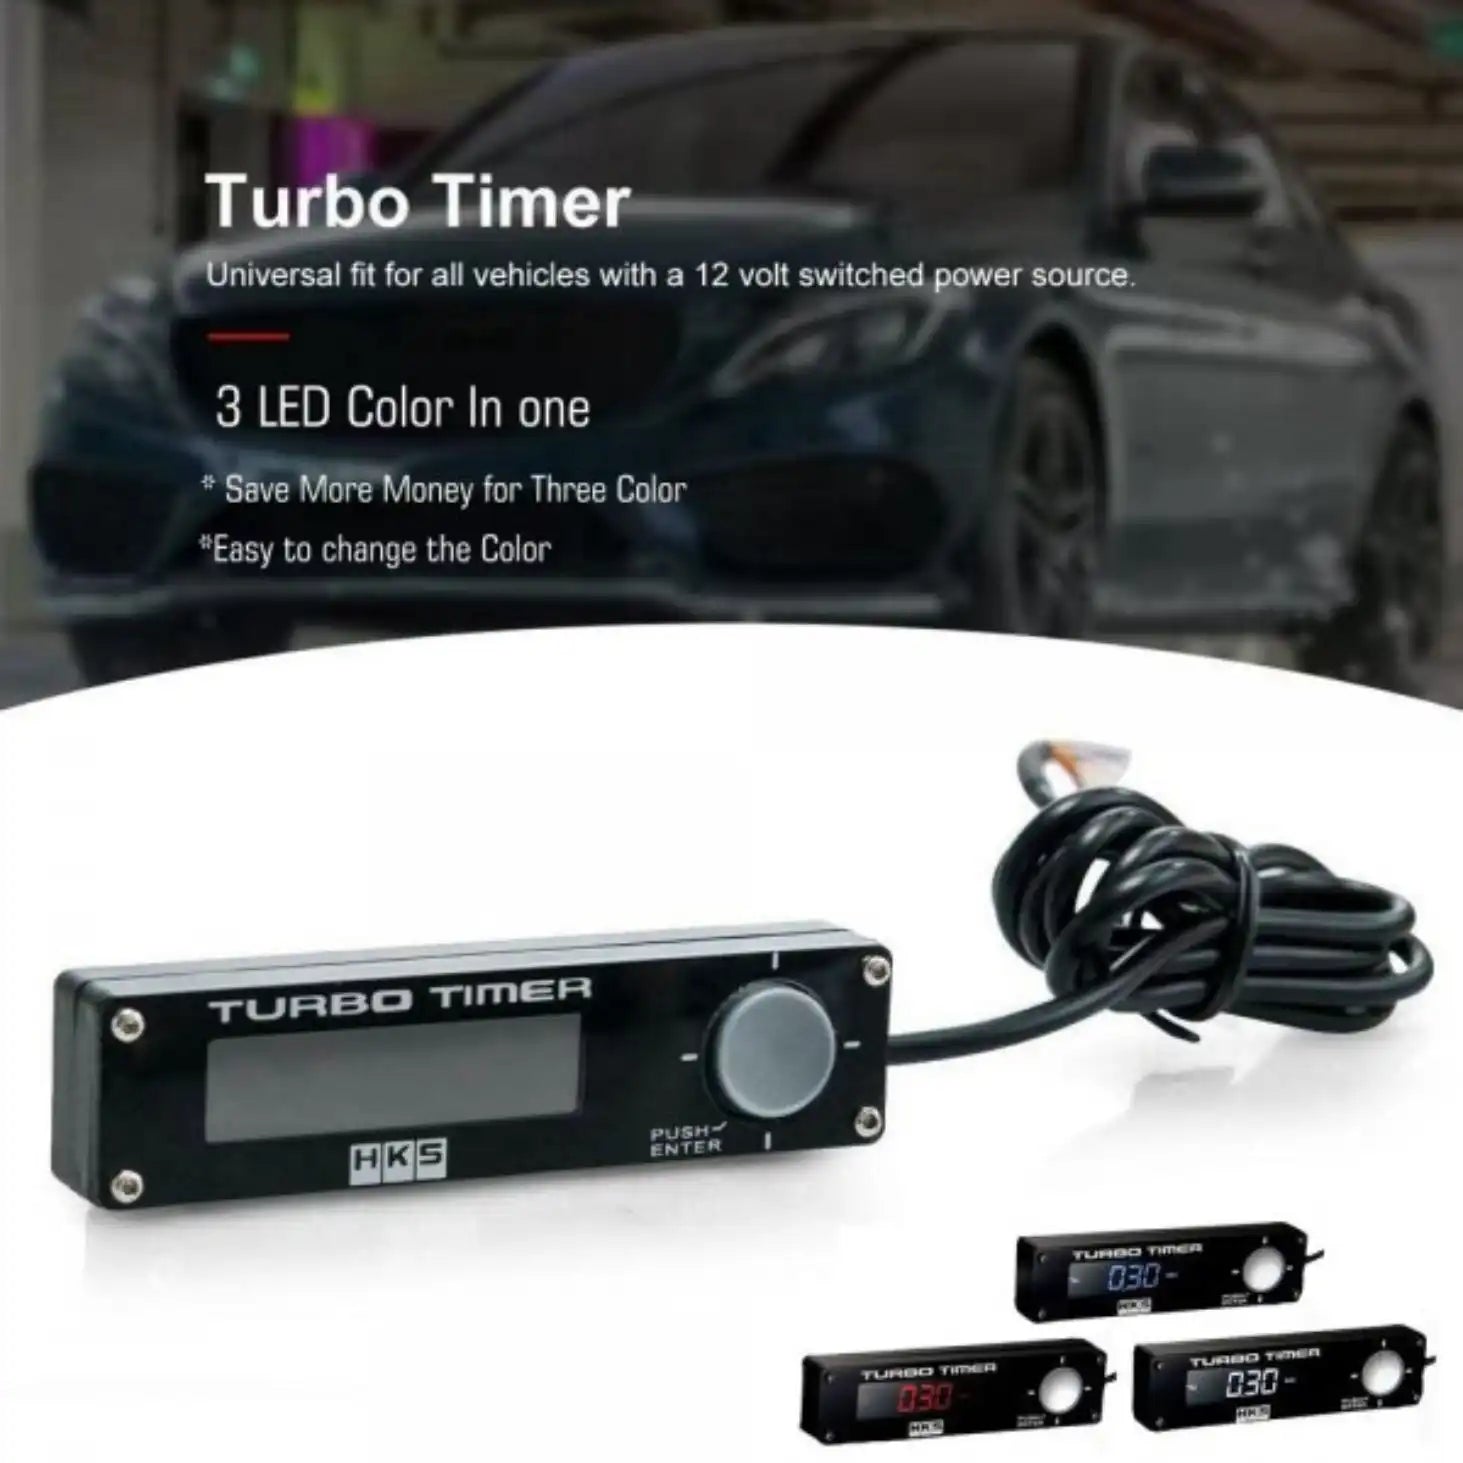 HKS Type-0 Digital Display Auto Car Turbo Timer Control Turbine Protector